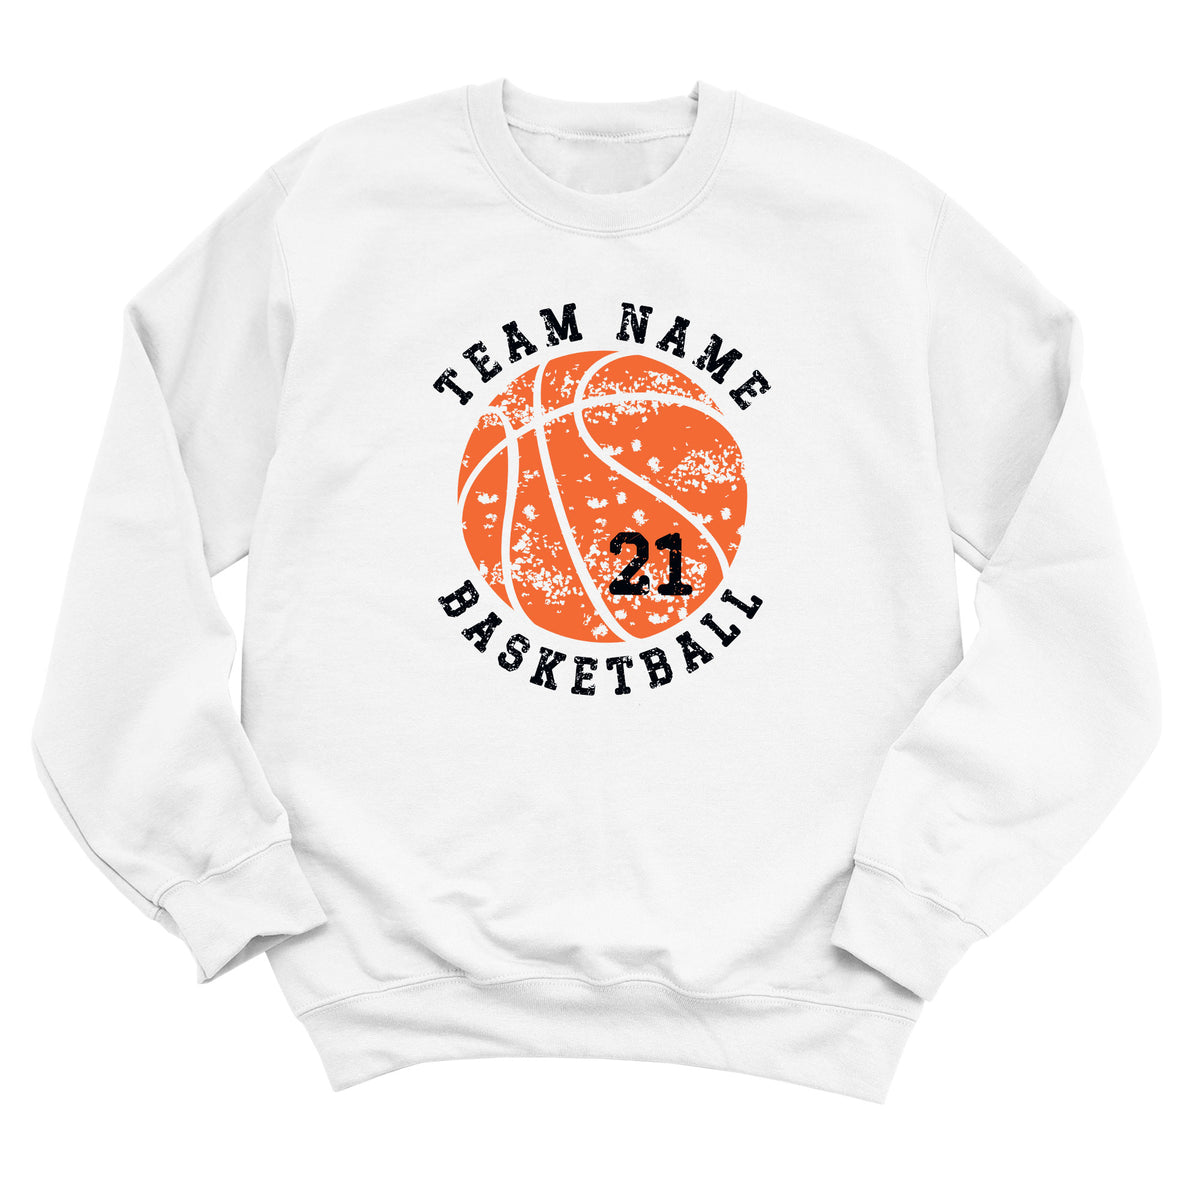 Distressed Team Name Basketball with Ball Sweatshirt